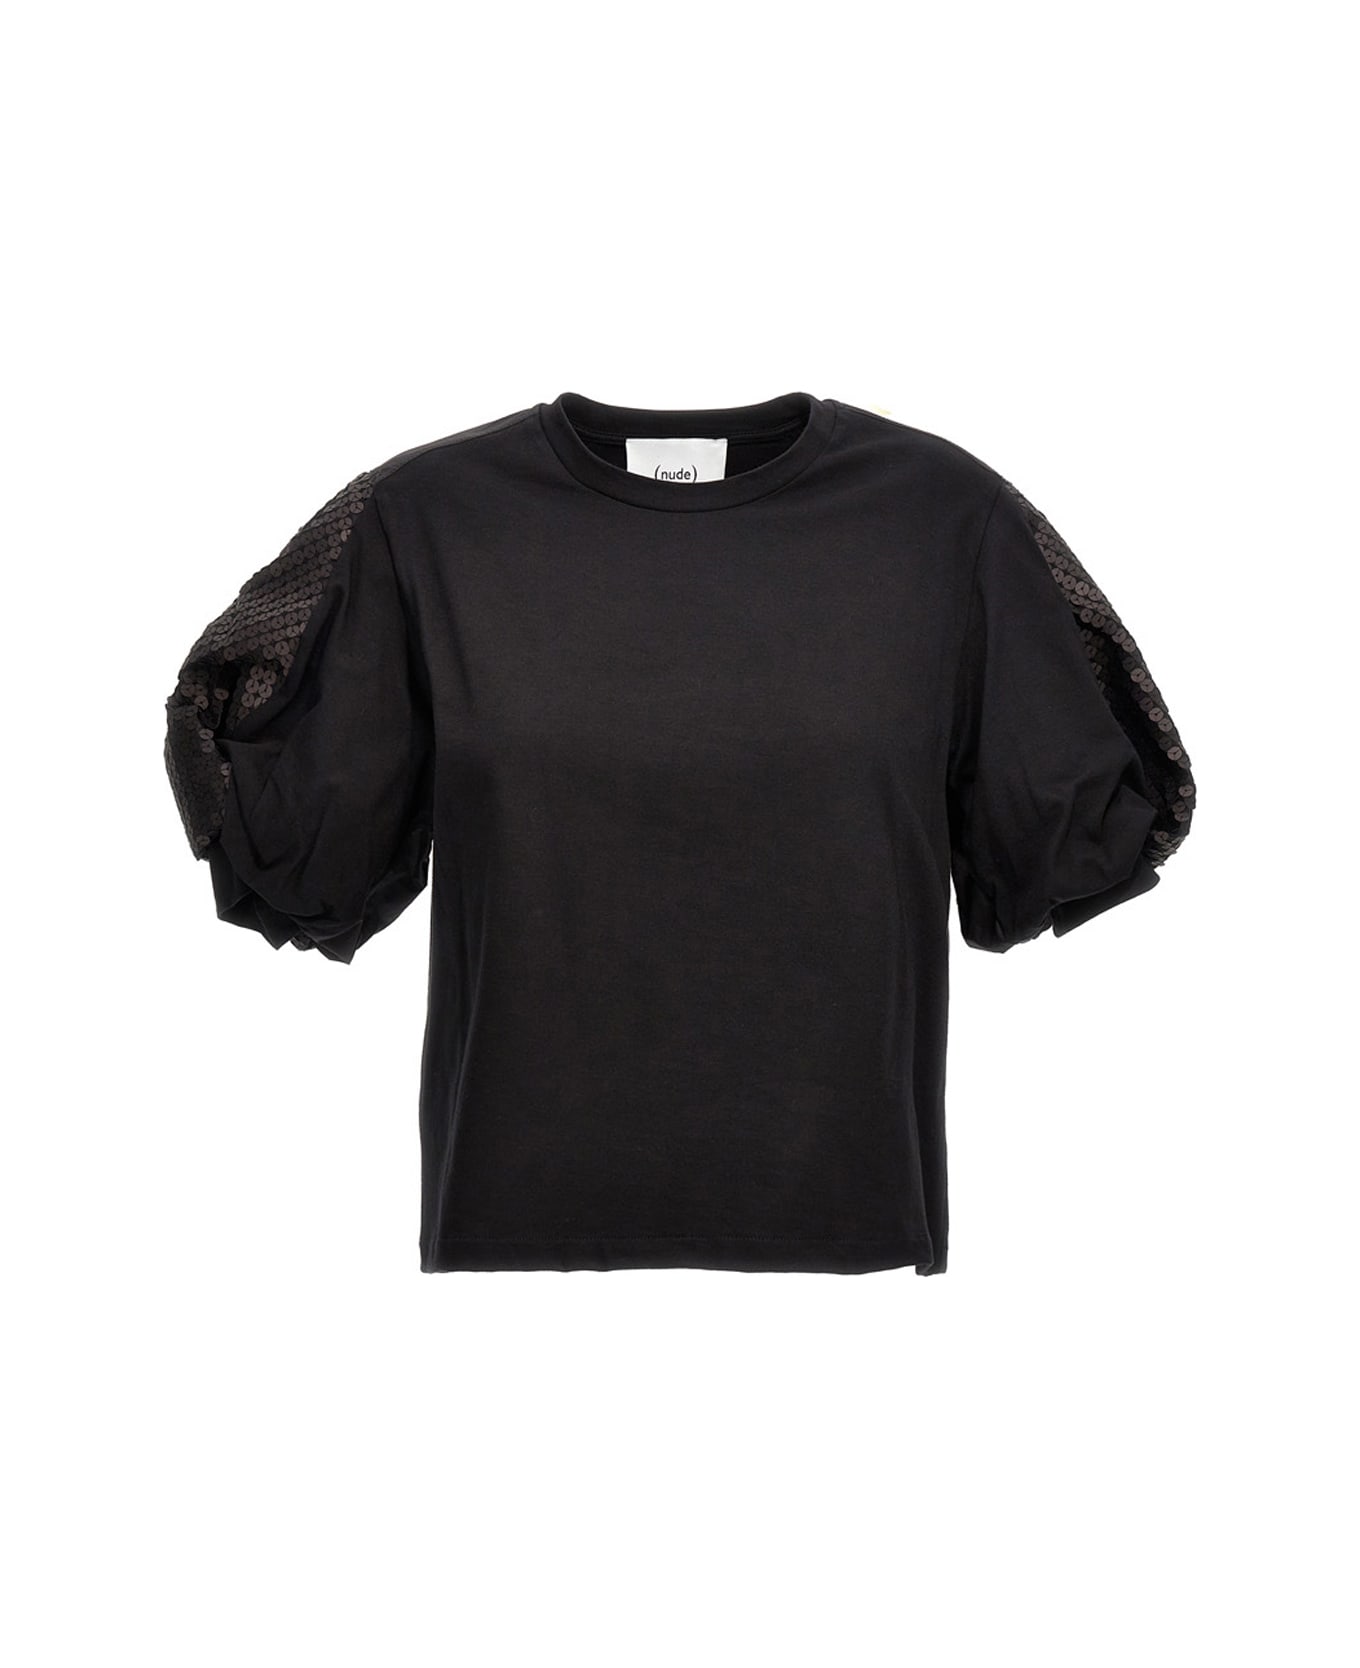 (nude) Sequin T-shirt - Black  